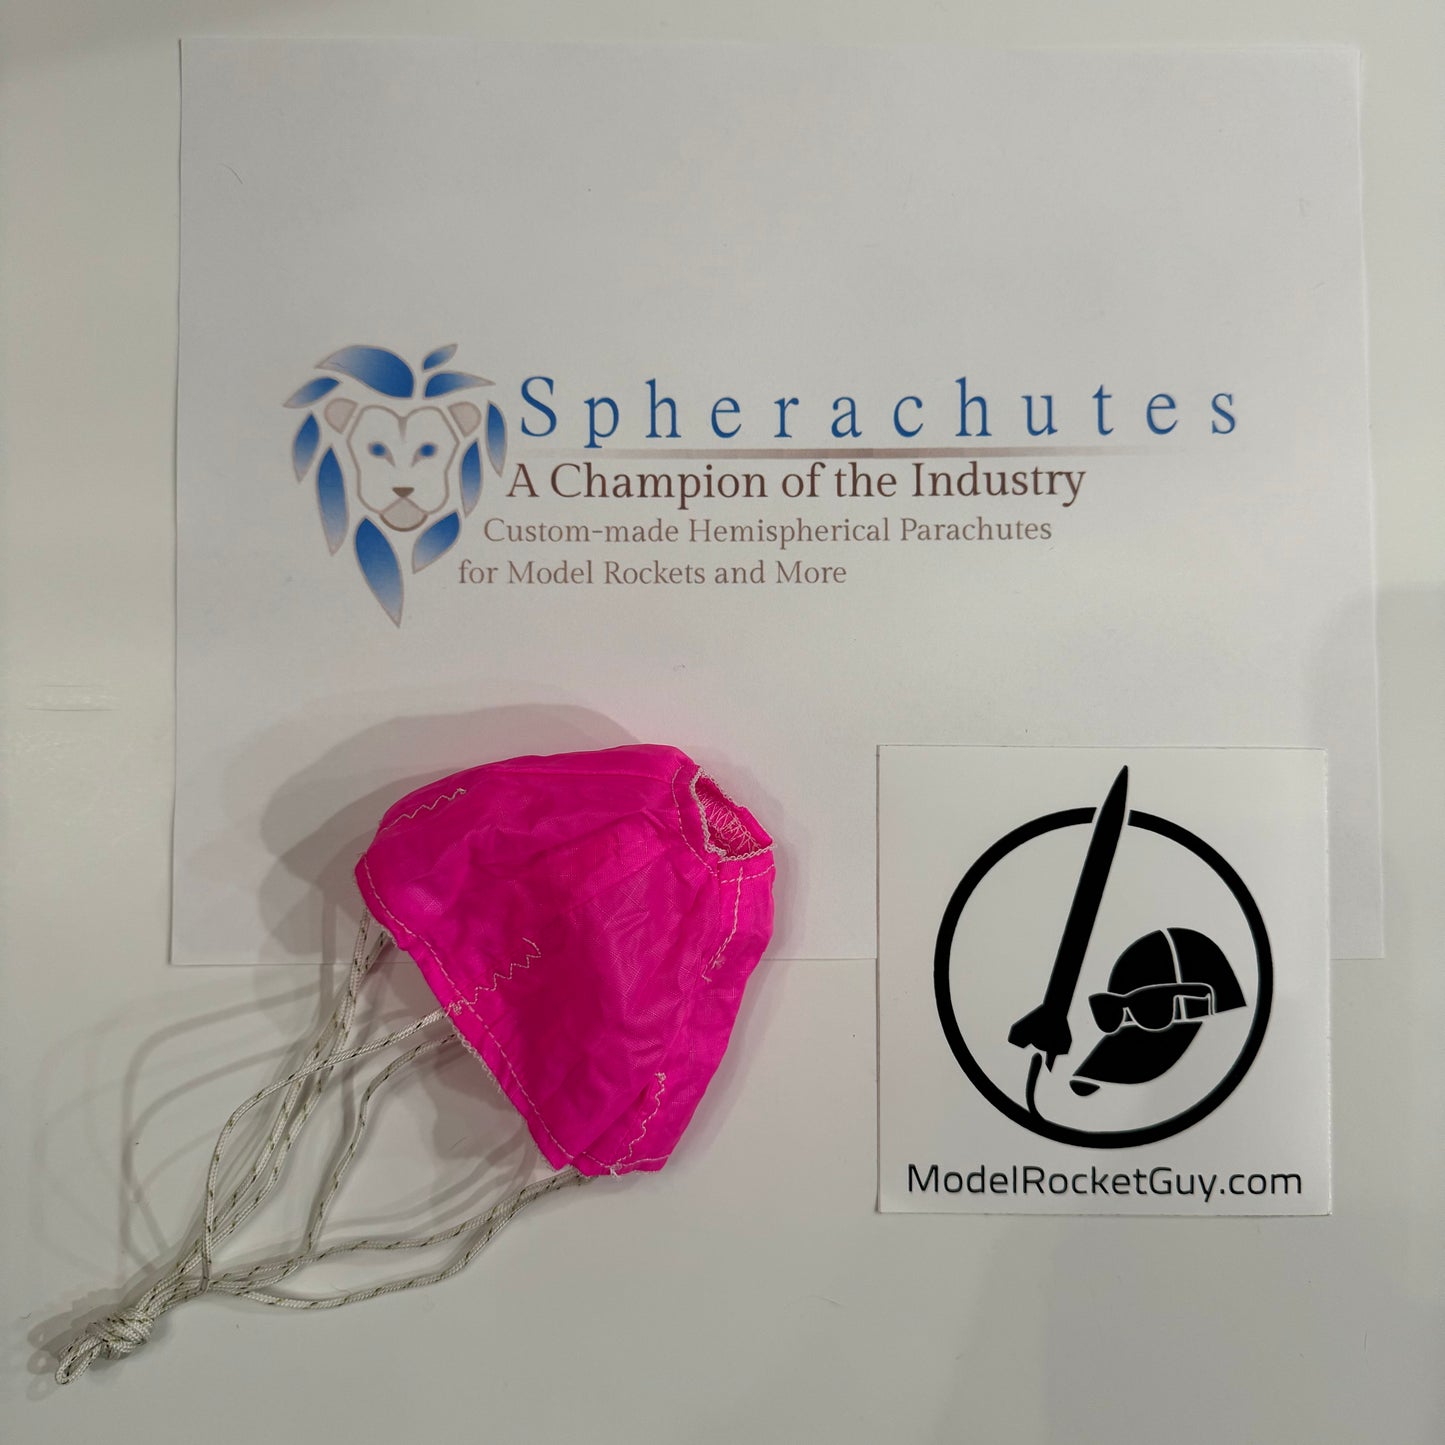 4.5" Diameter Medium Mini Spherachute Parachute